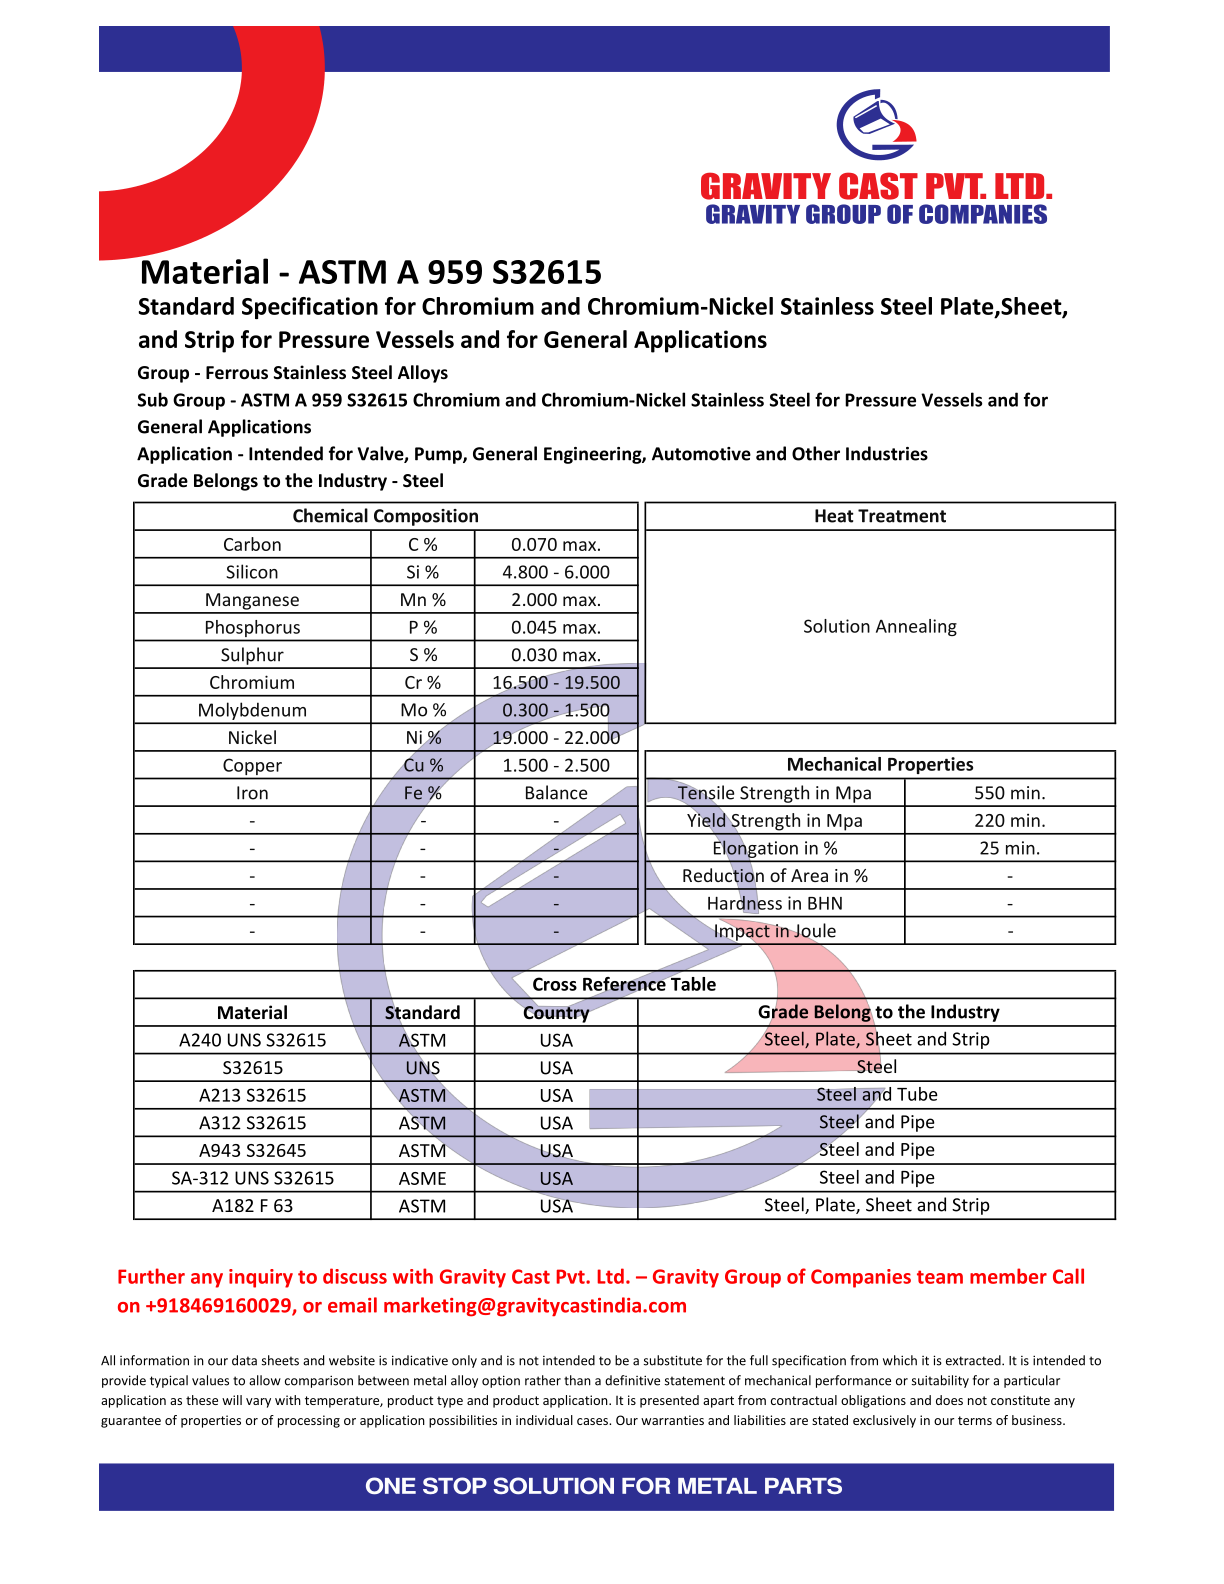 ASTM A 959 S32615.pdf